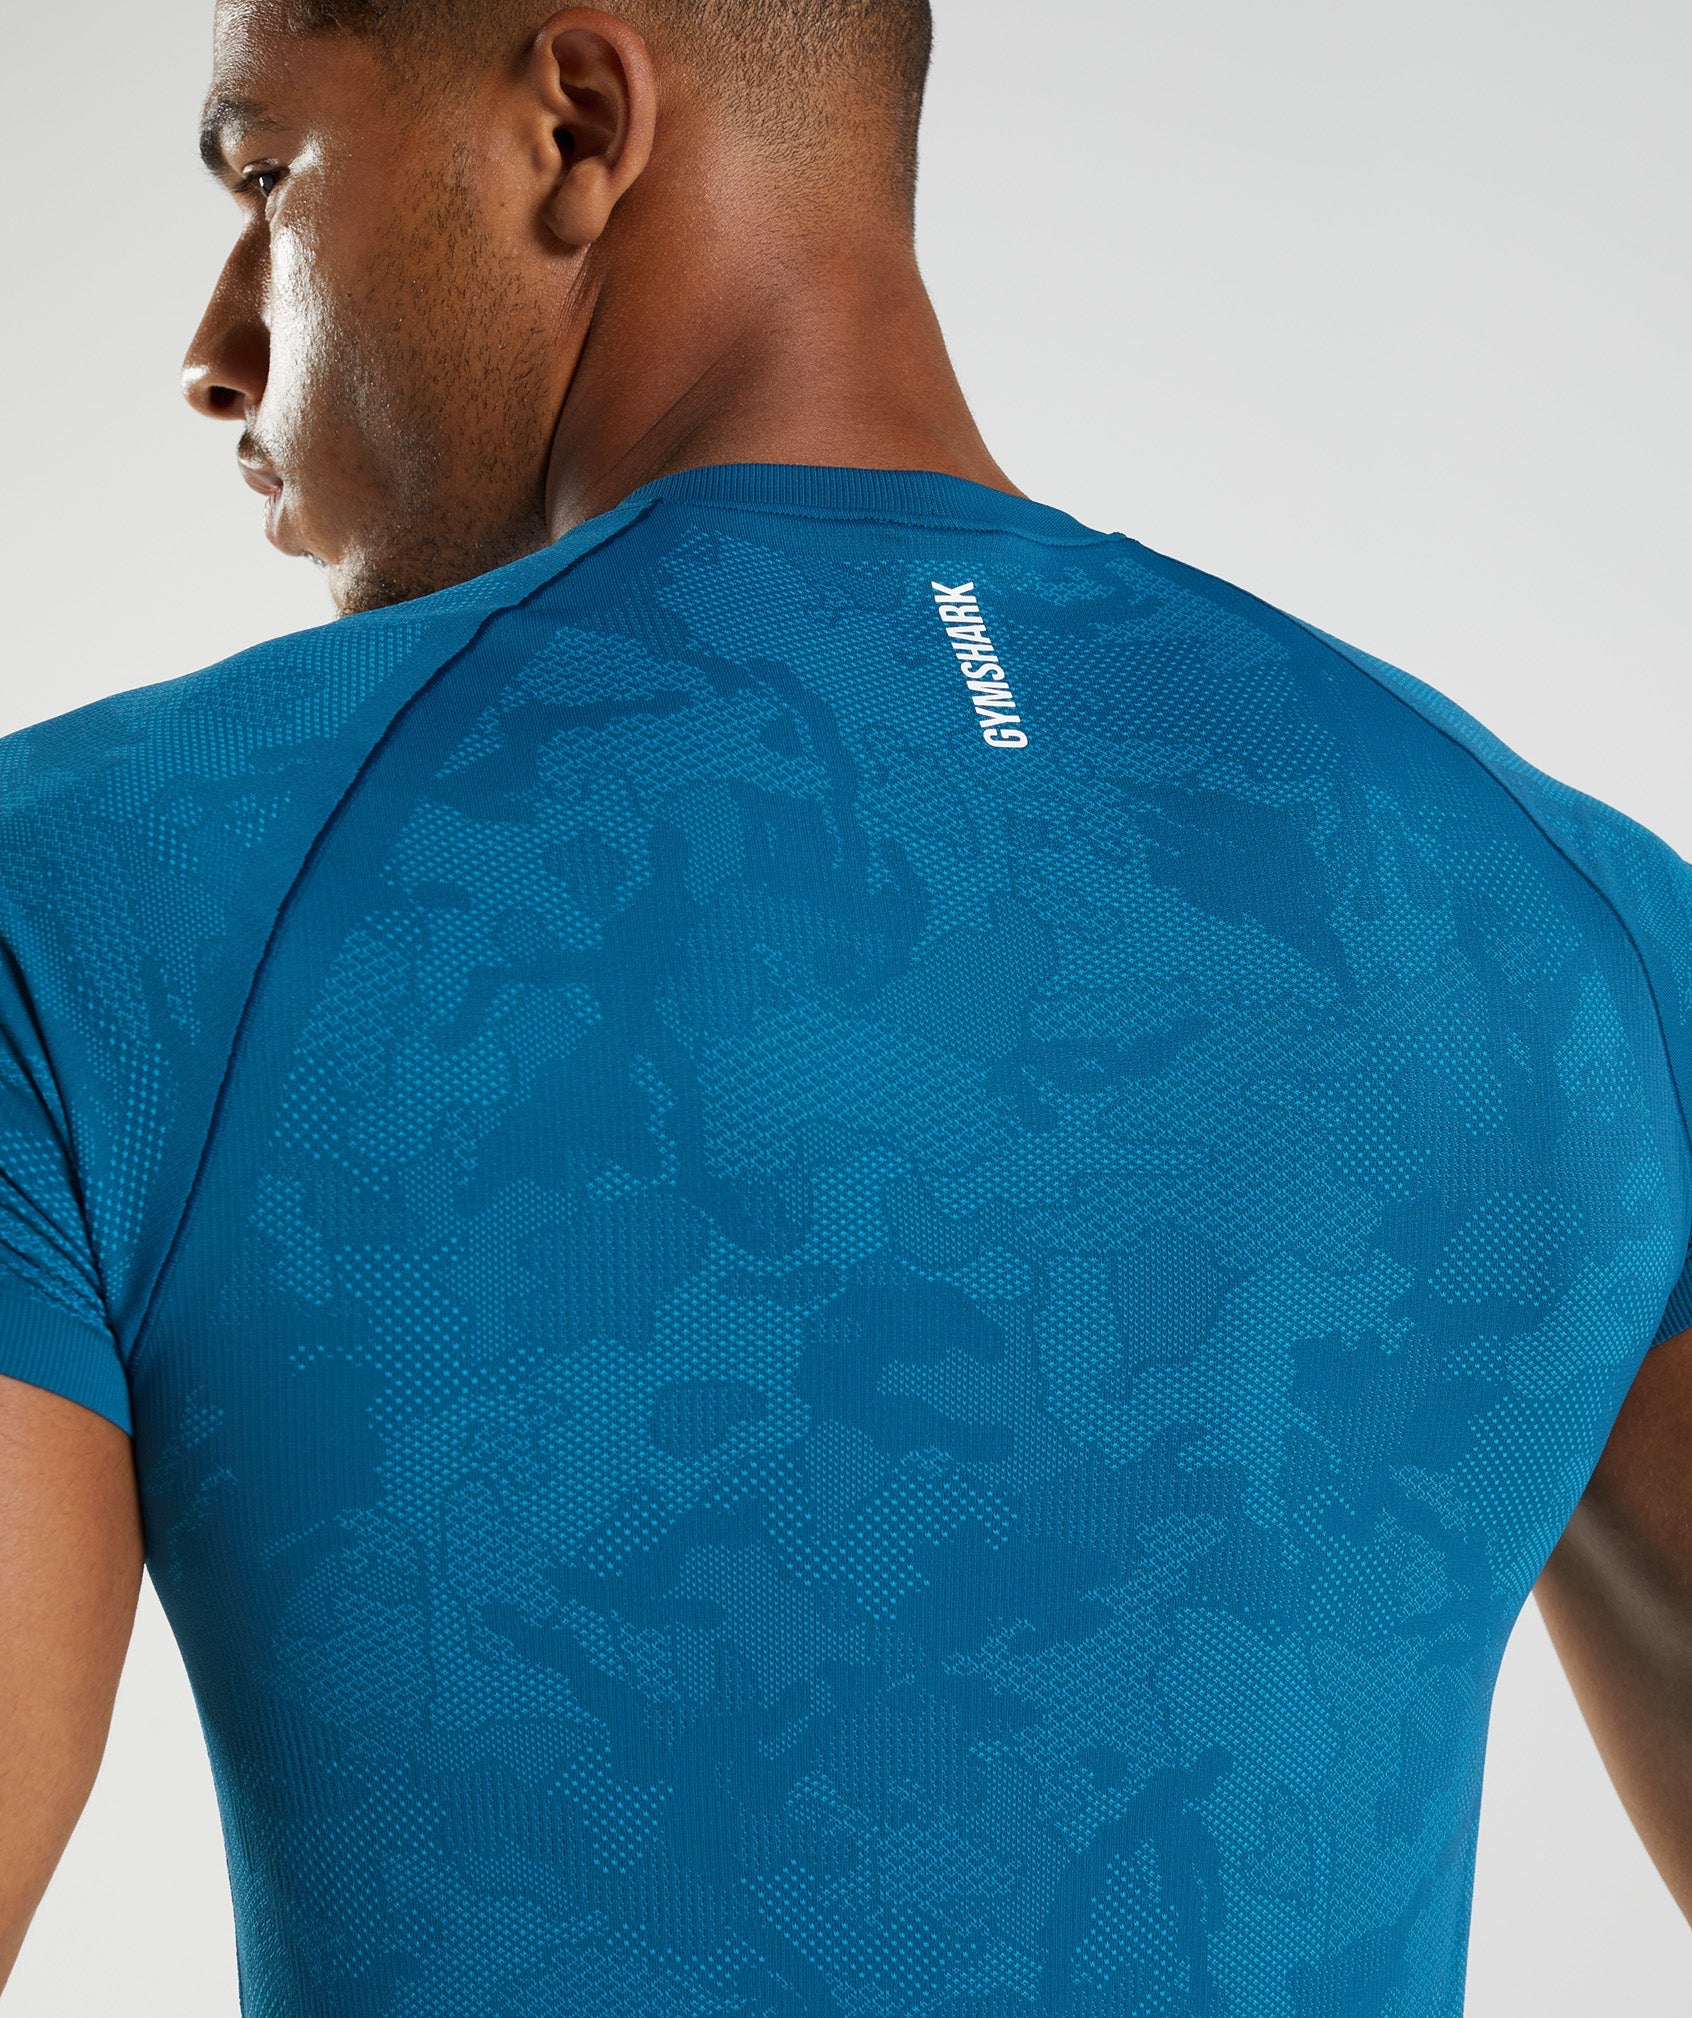 Gymshark Geo Seamless T-Shirt - Atlantic Blue/Shark Blue